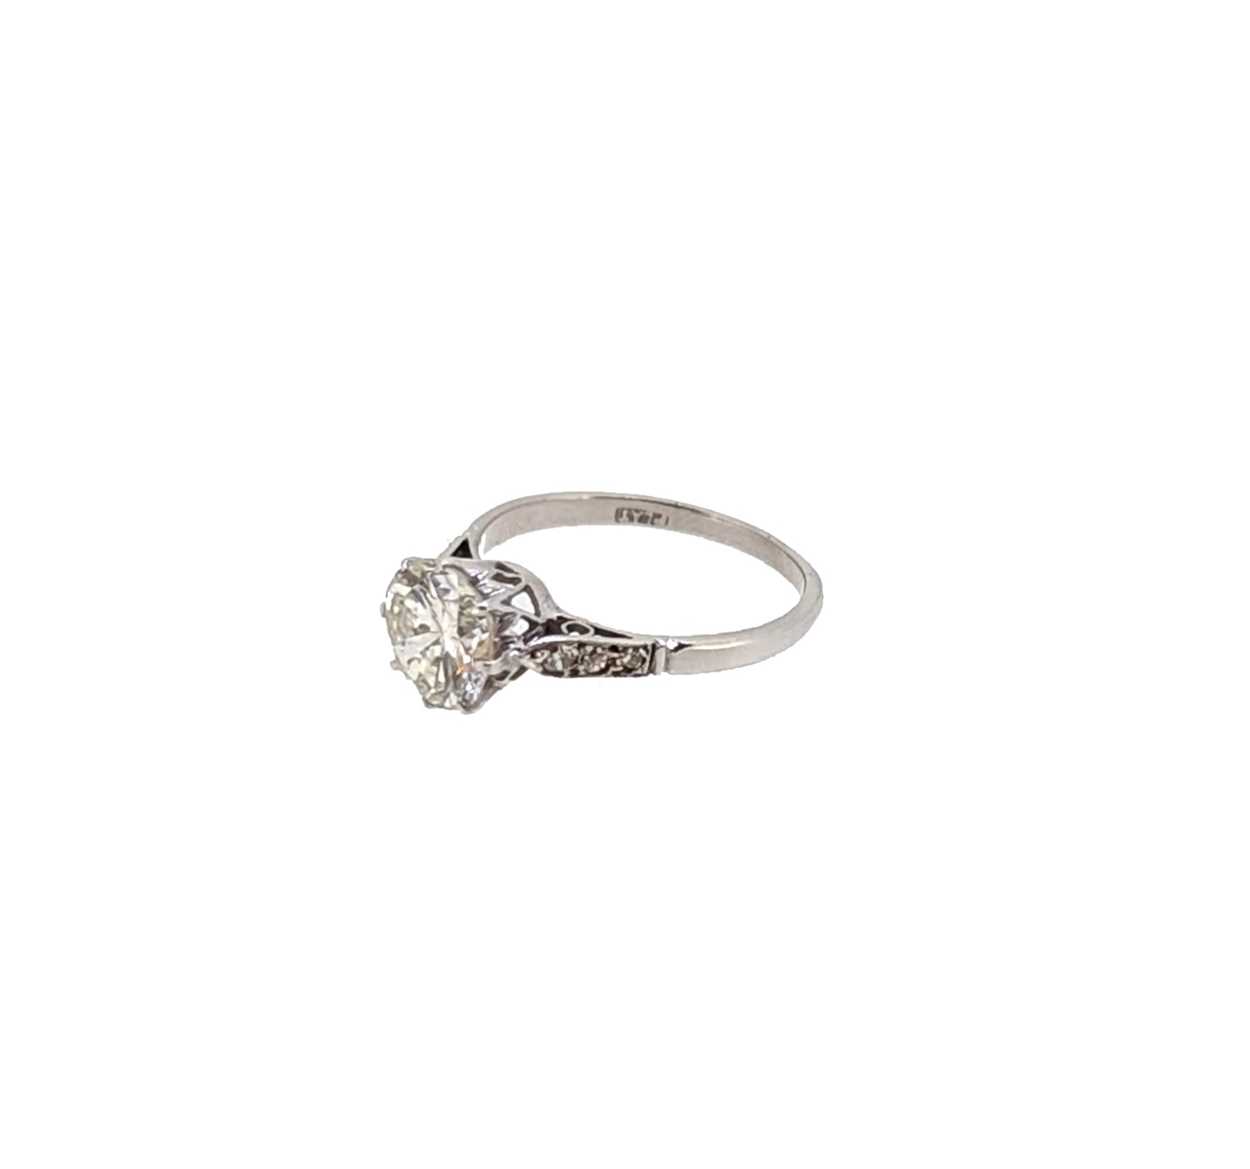 An early 20th century single stone diamond ring, - Image 2 of 4